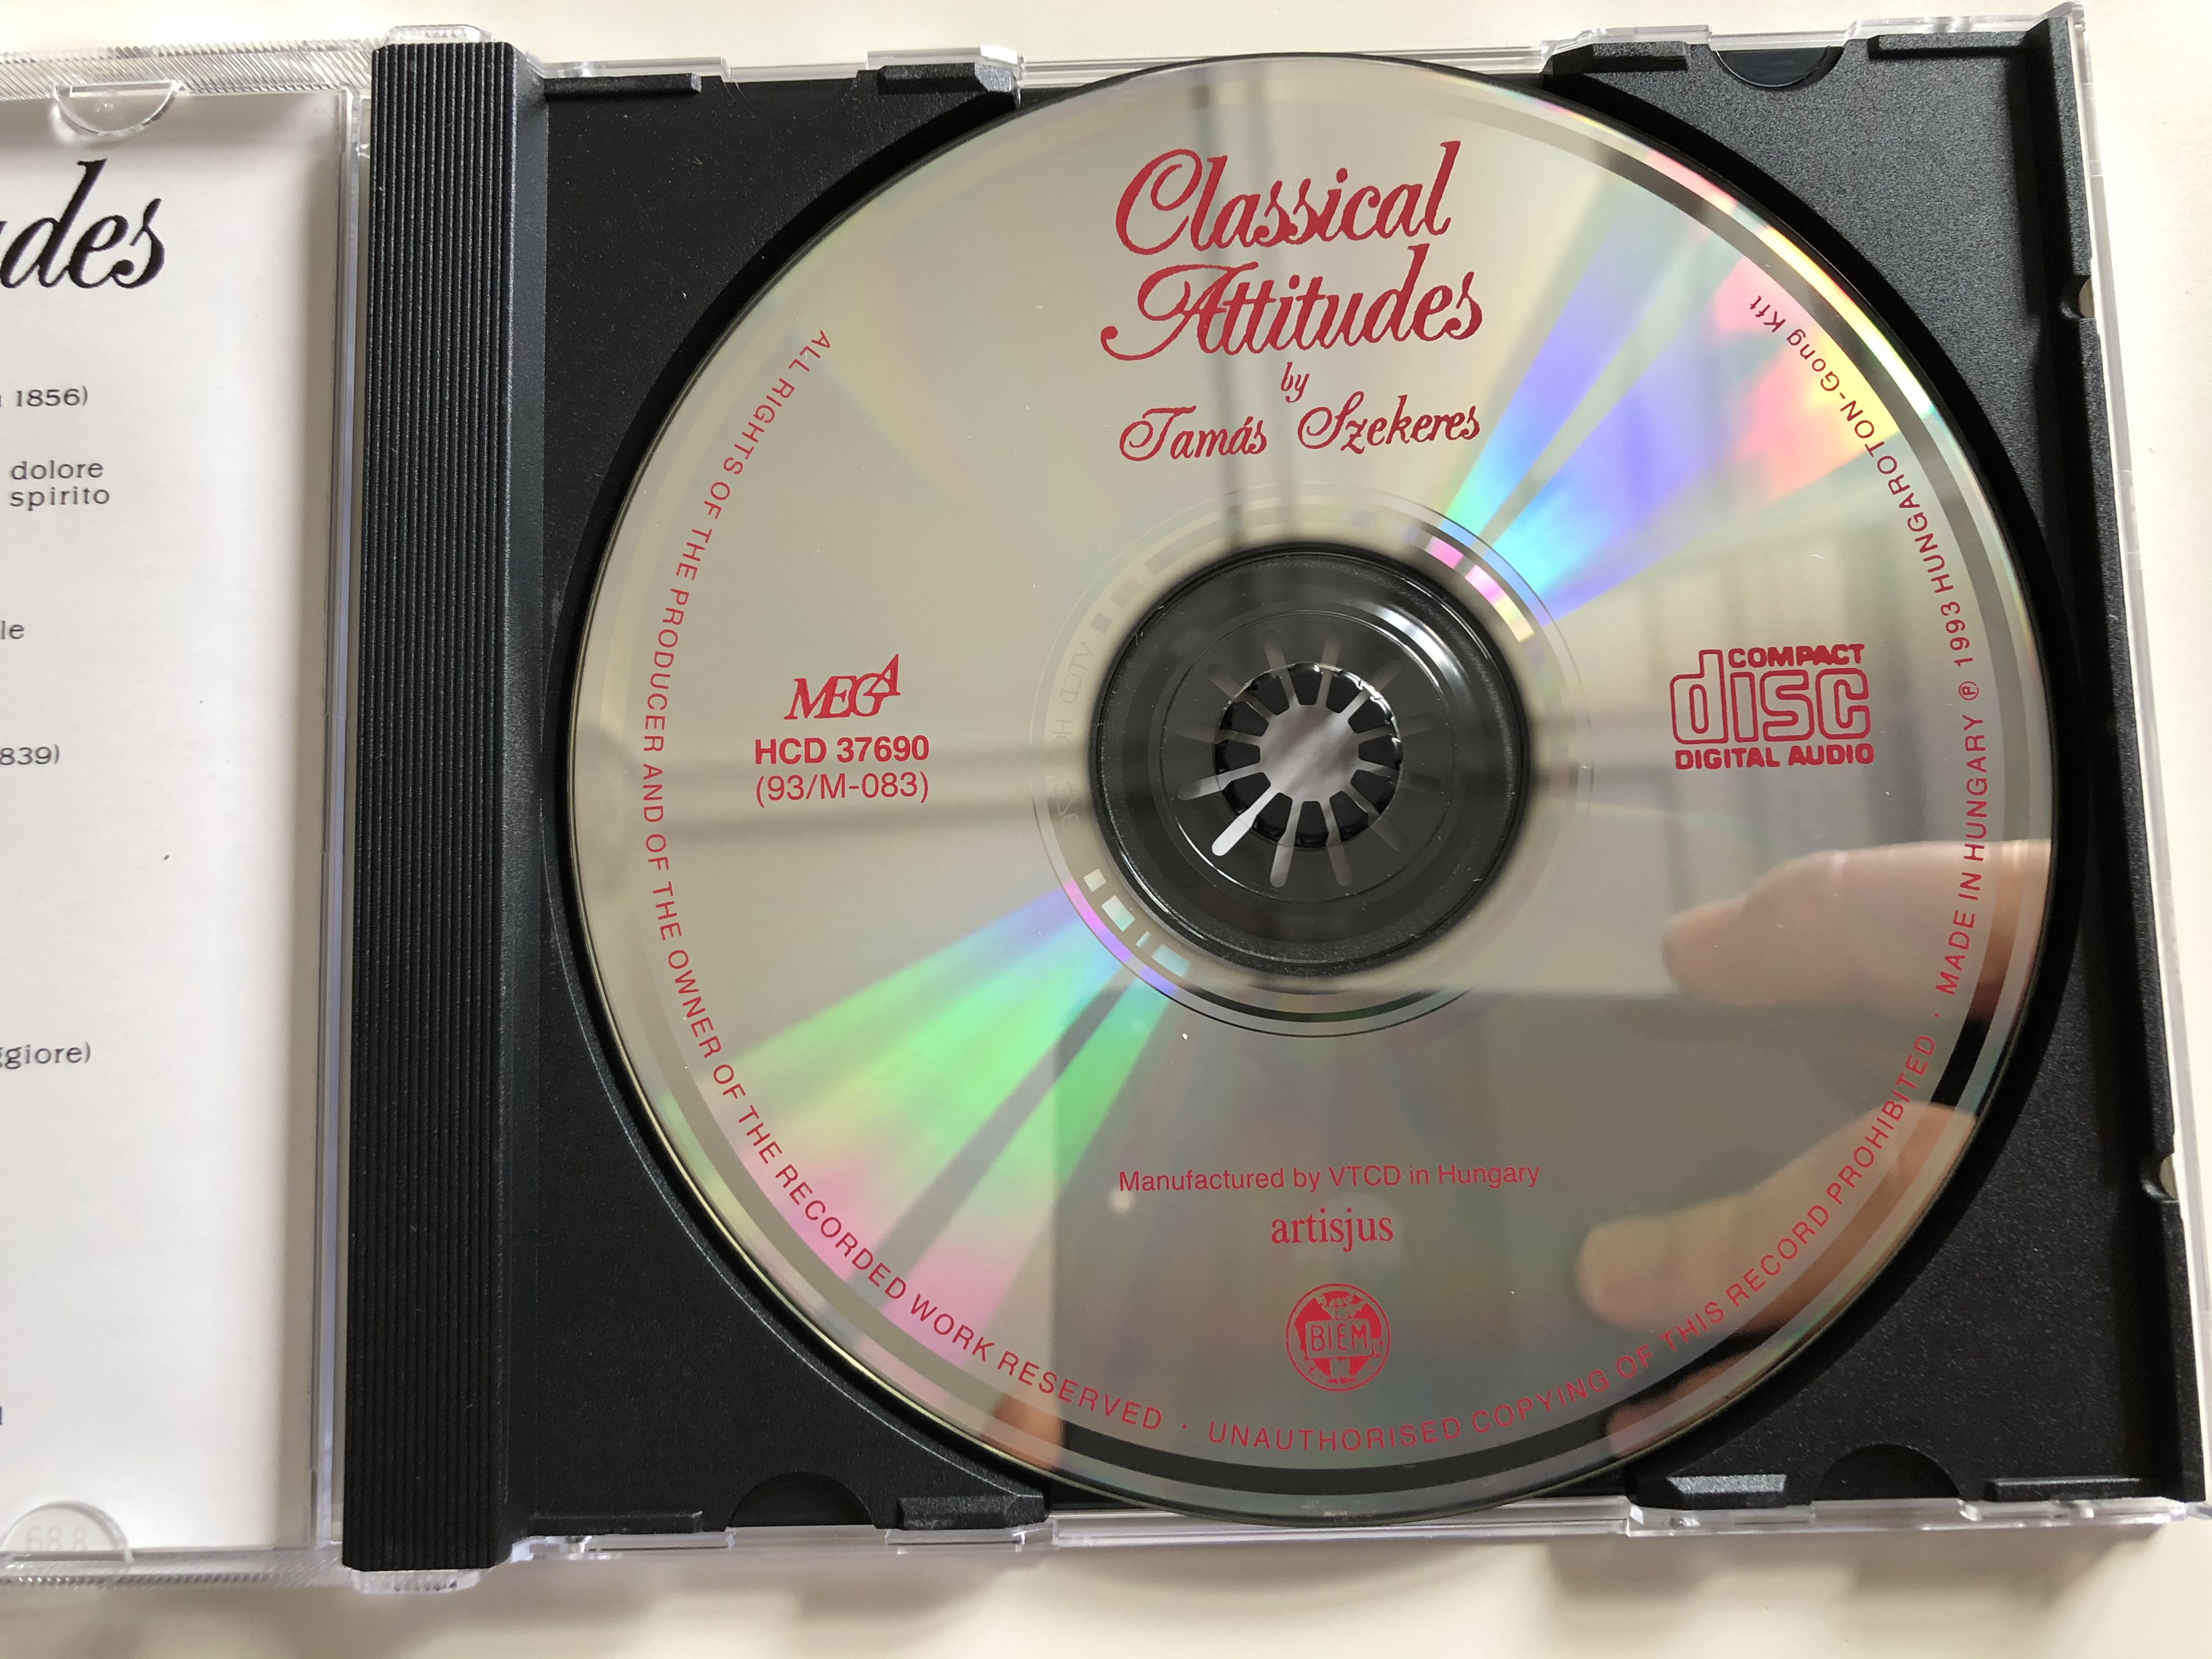 classical-attitudes-by-tam-s-szekeres-mega-audio-cd-1993-hcd-37690-6-.jpg